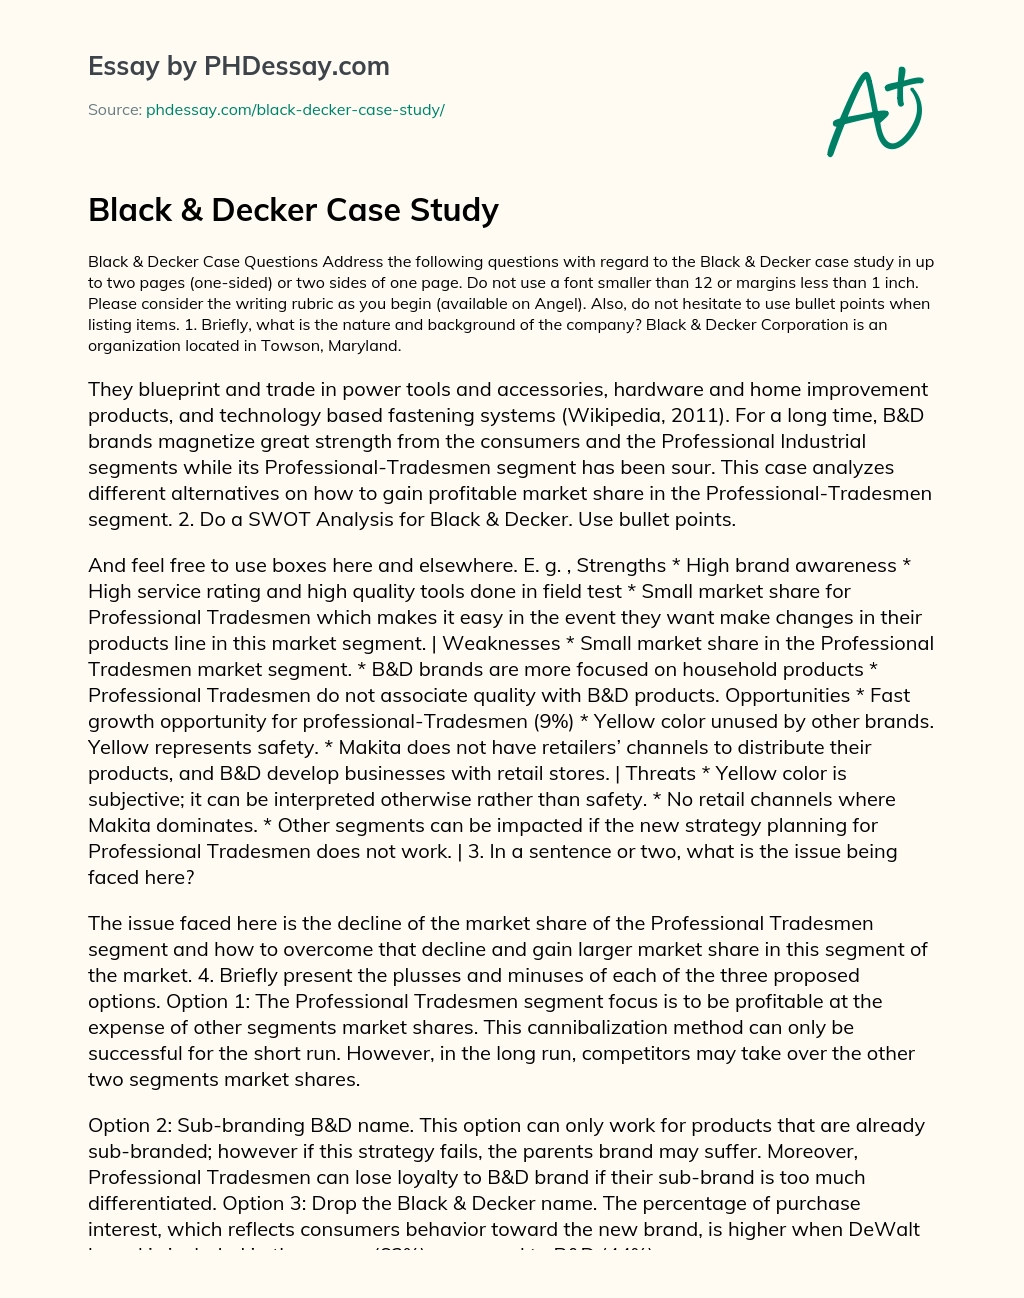 Black & Decker Case Study essay